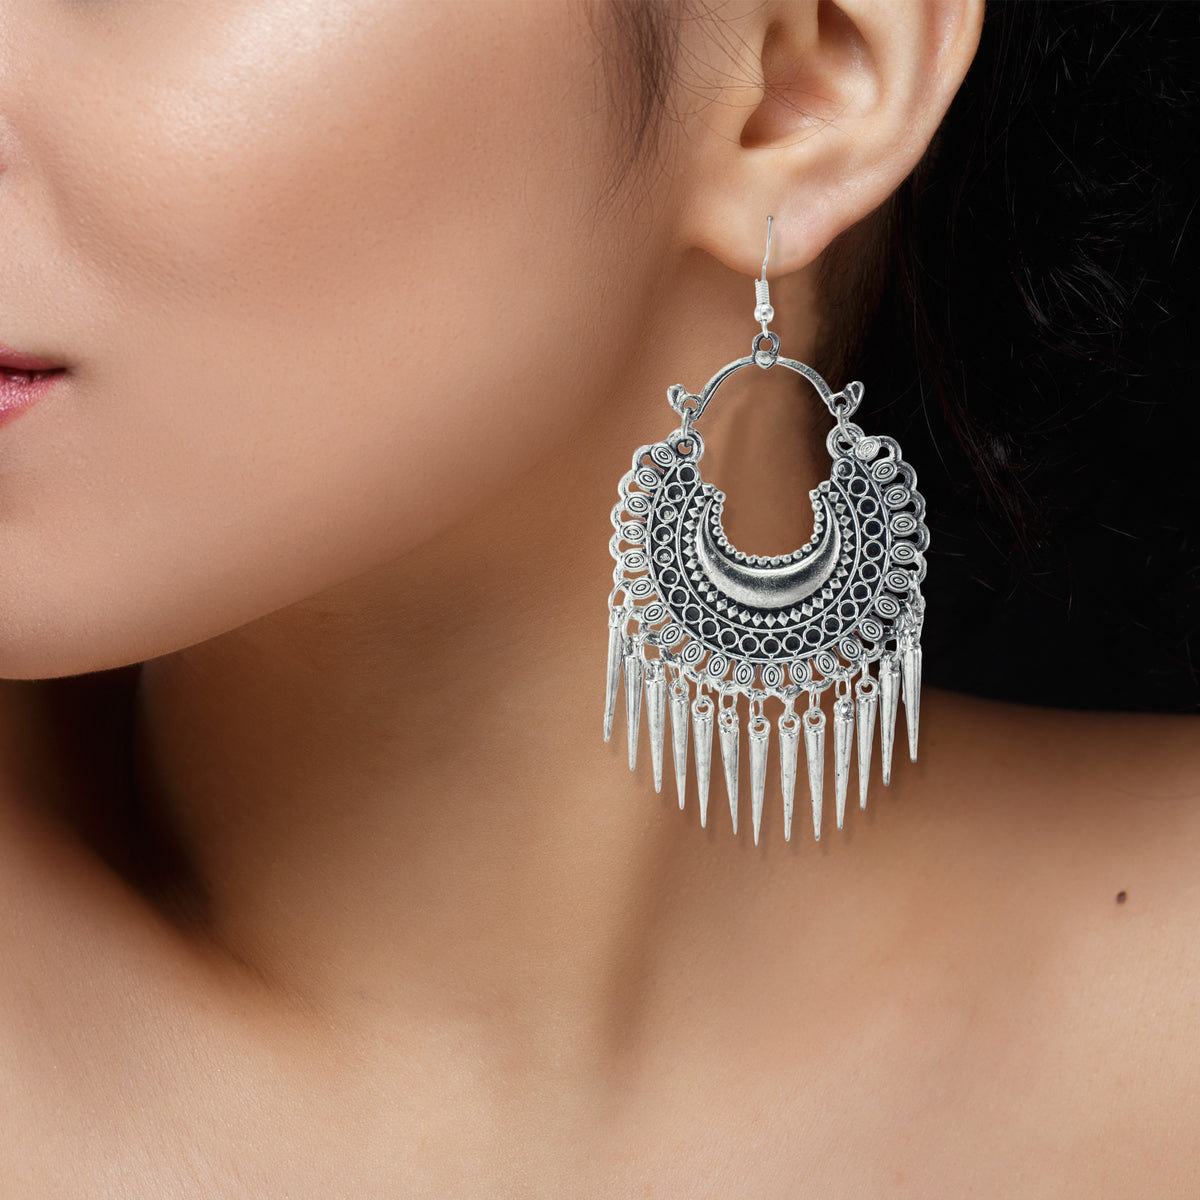 Abhinn Stylish German Silver Oxidized Crescent Chandbali Earrings for Women